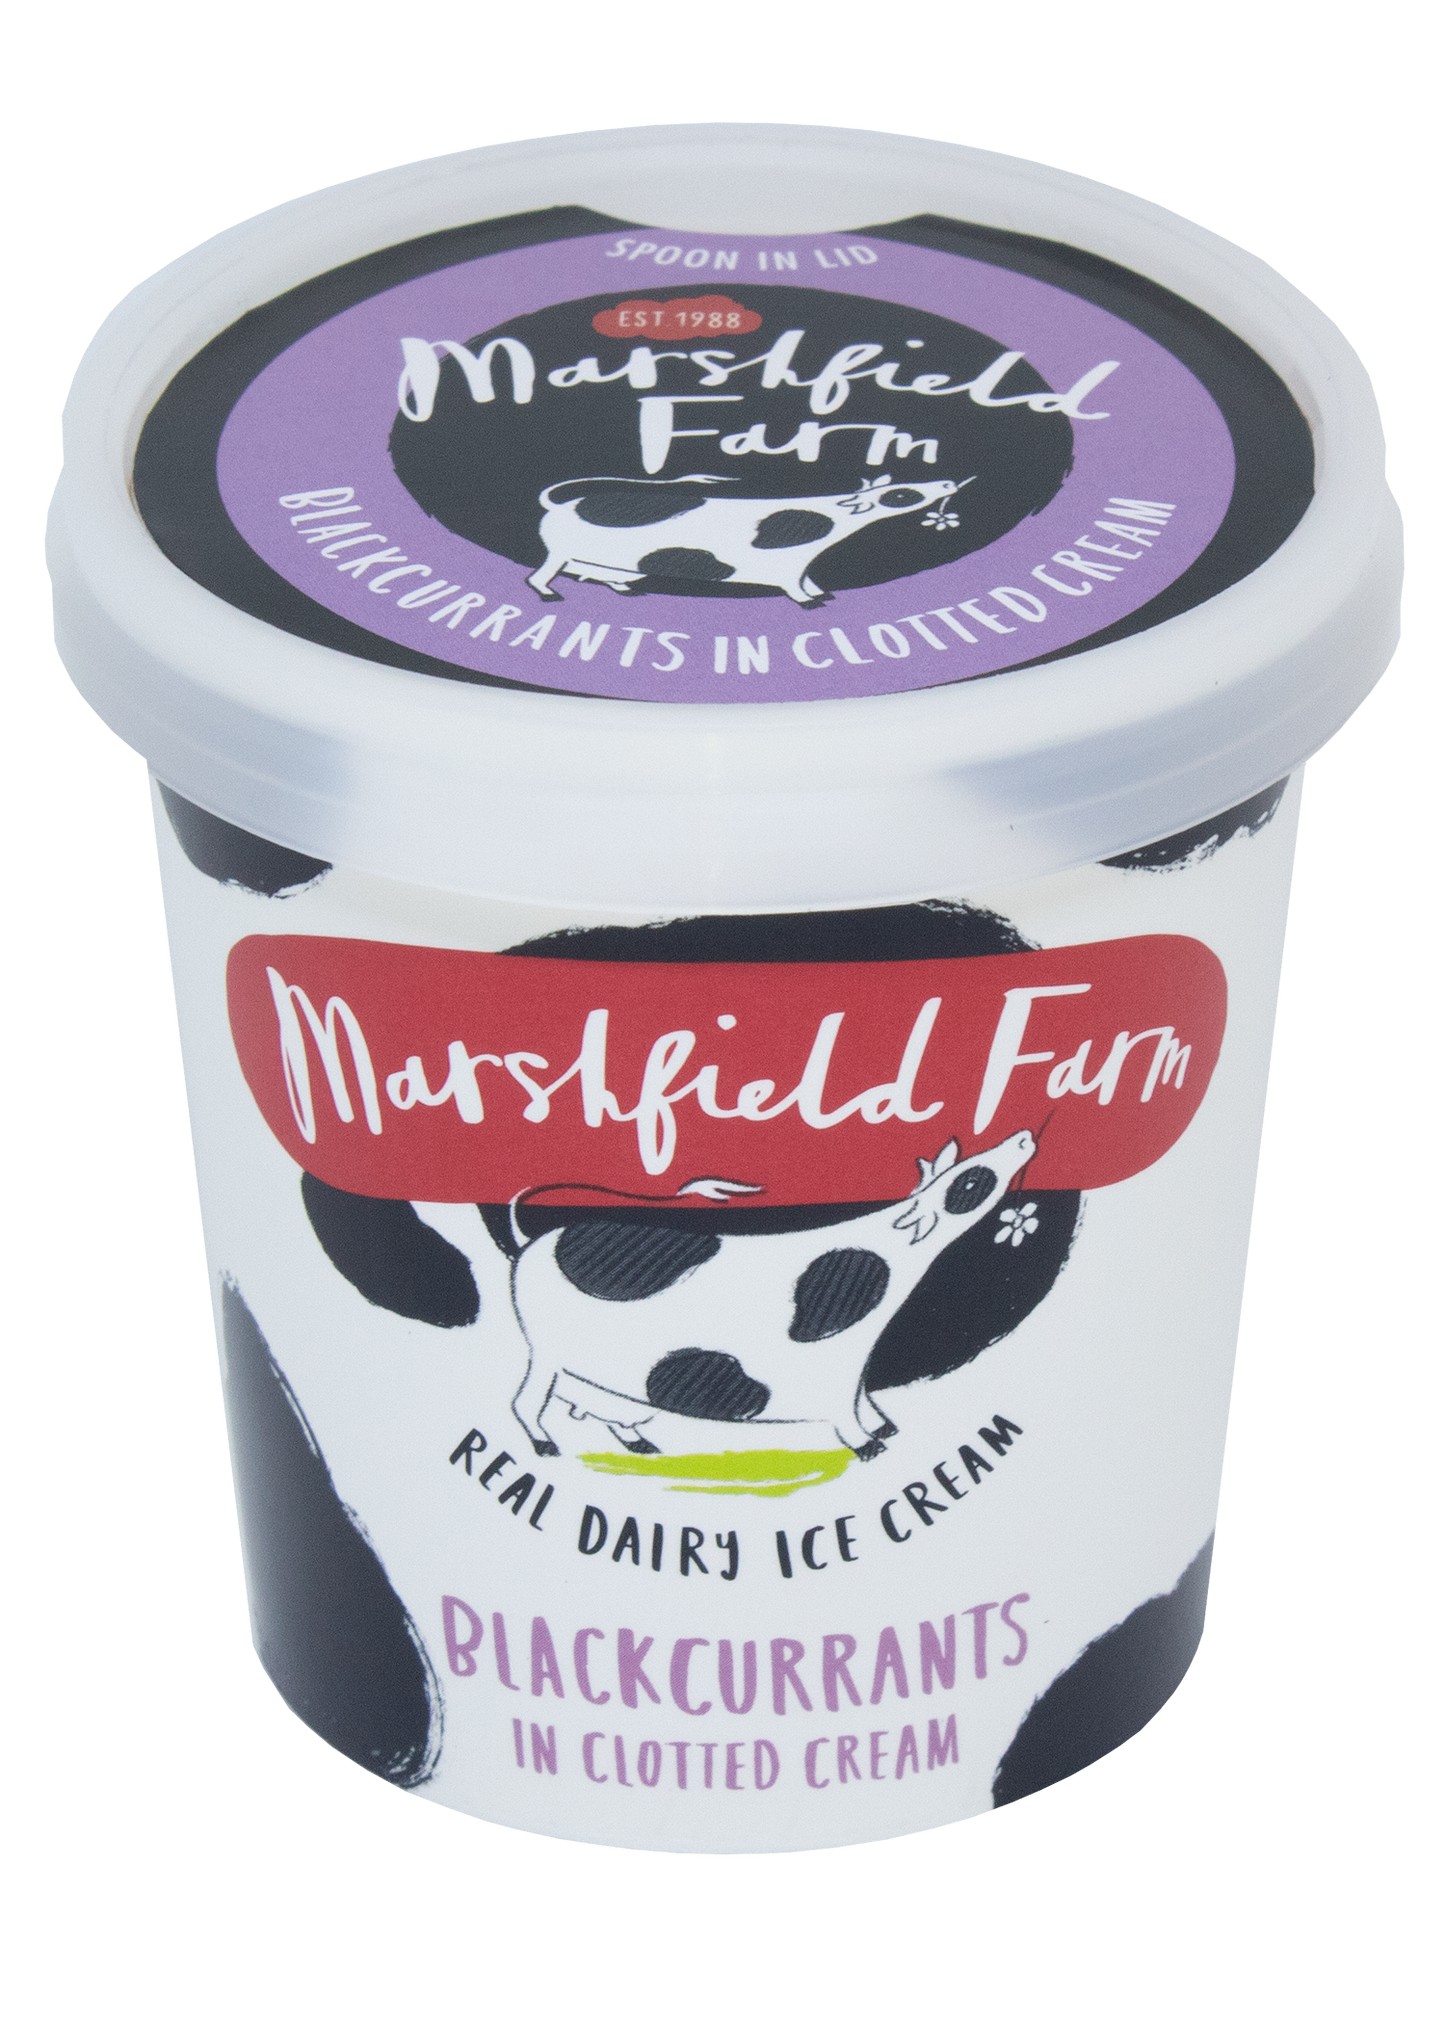 Marshfield Farm Ice Cream 125ml Blackcurrants in Clotted Cream